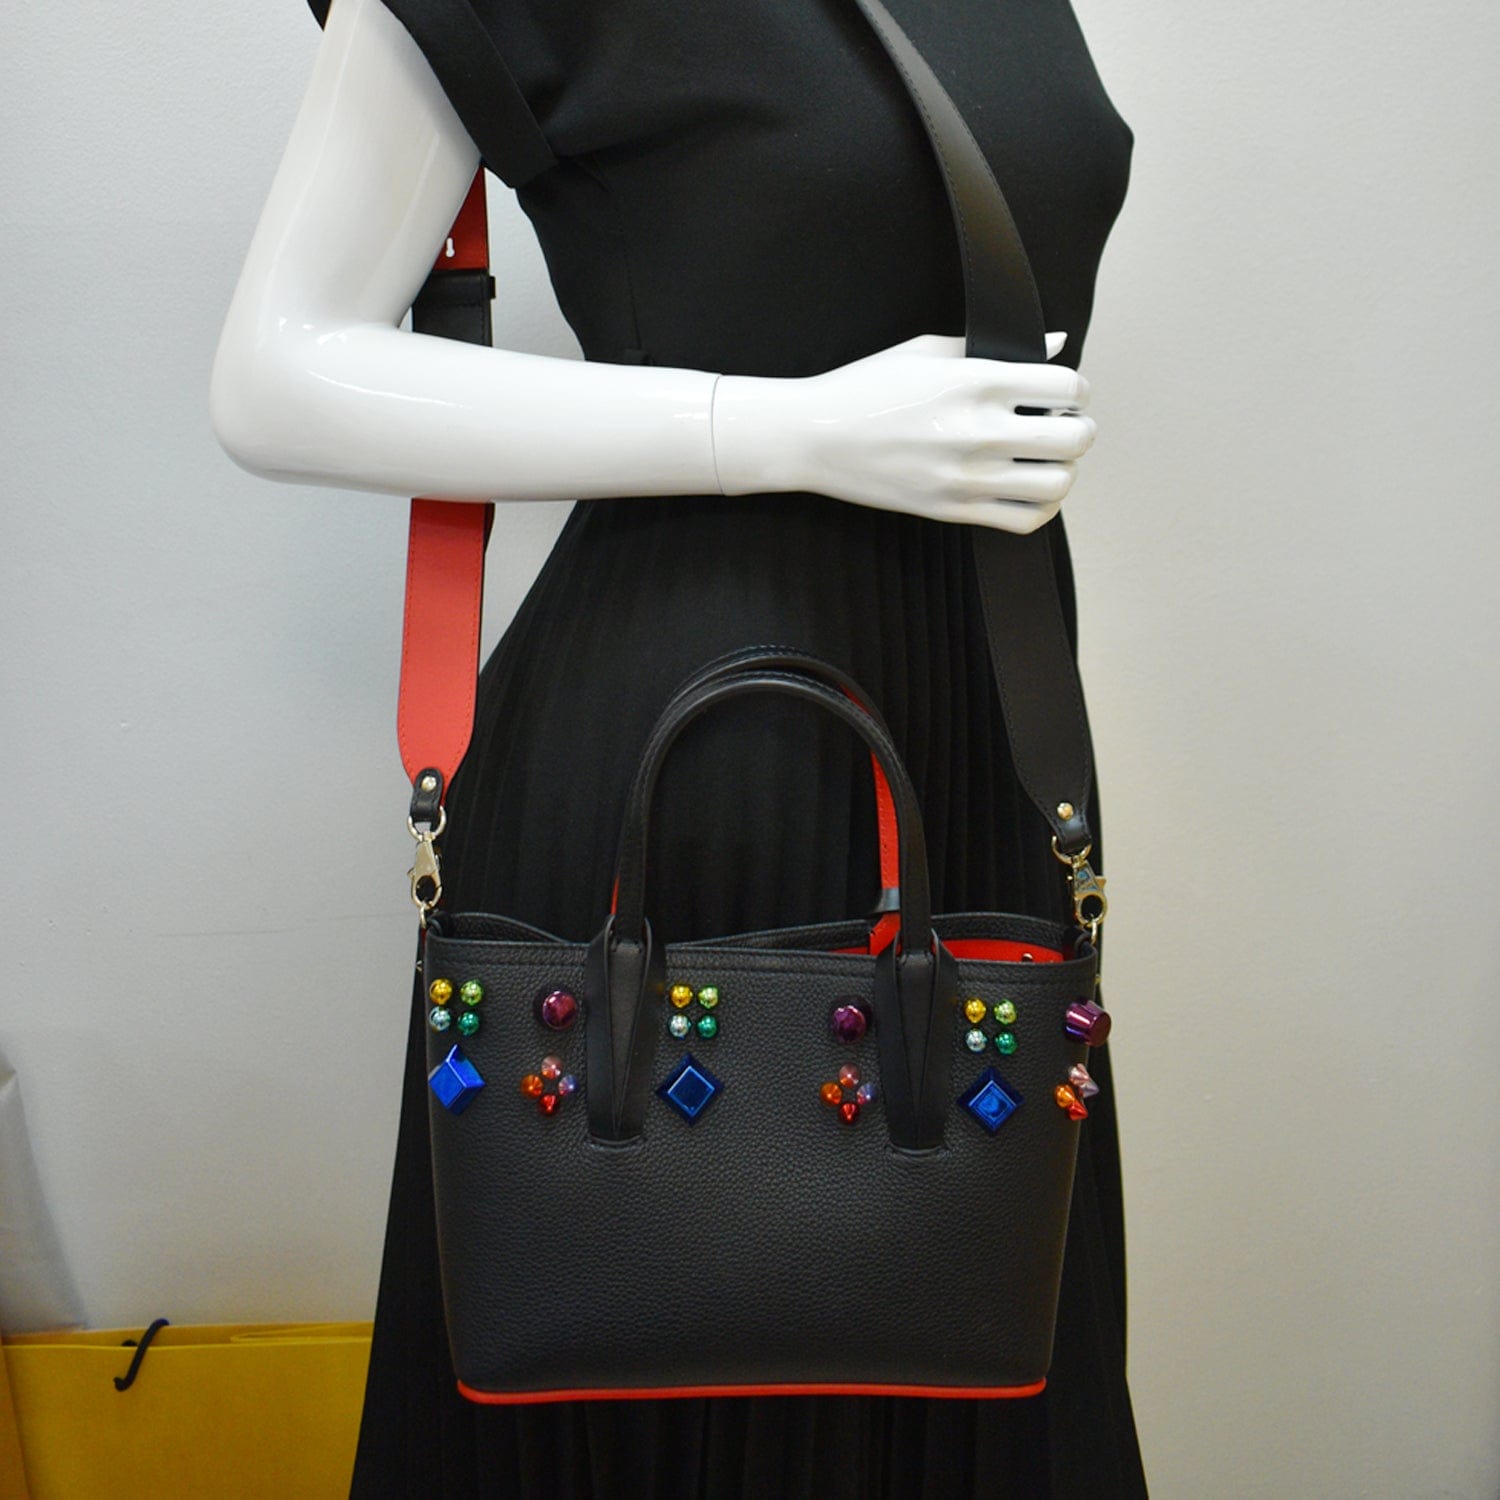 Cabata Mini Embellished Leather Tote Bag in Multicoloured - Christian  Louboutin